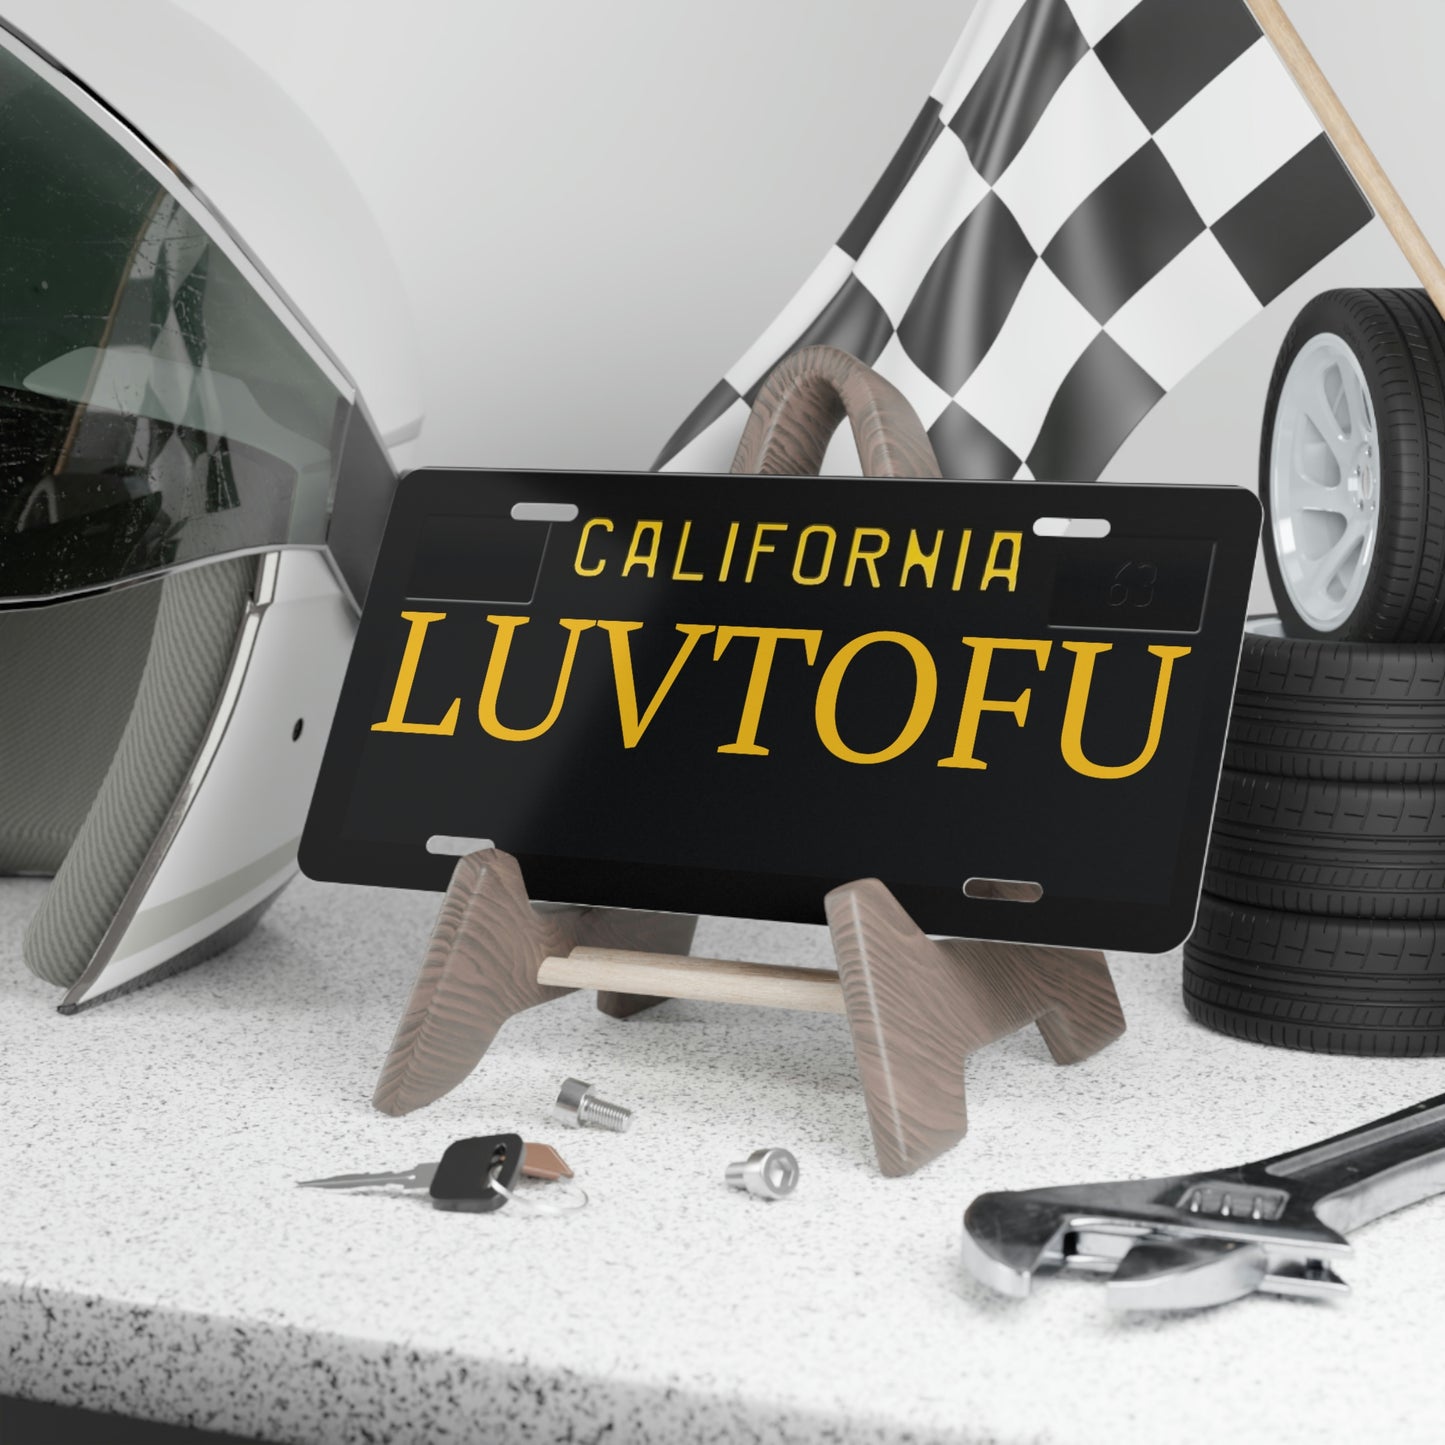 LUVTOFU Vanity License Plate